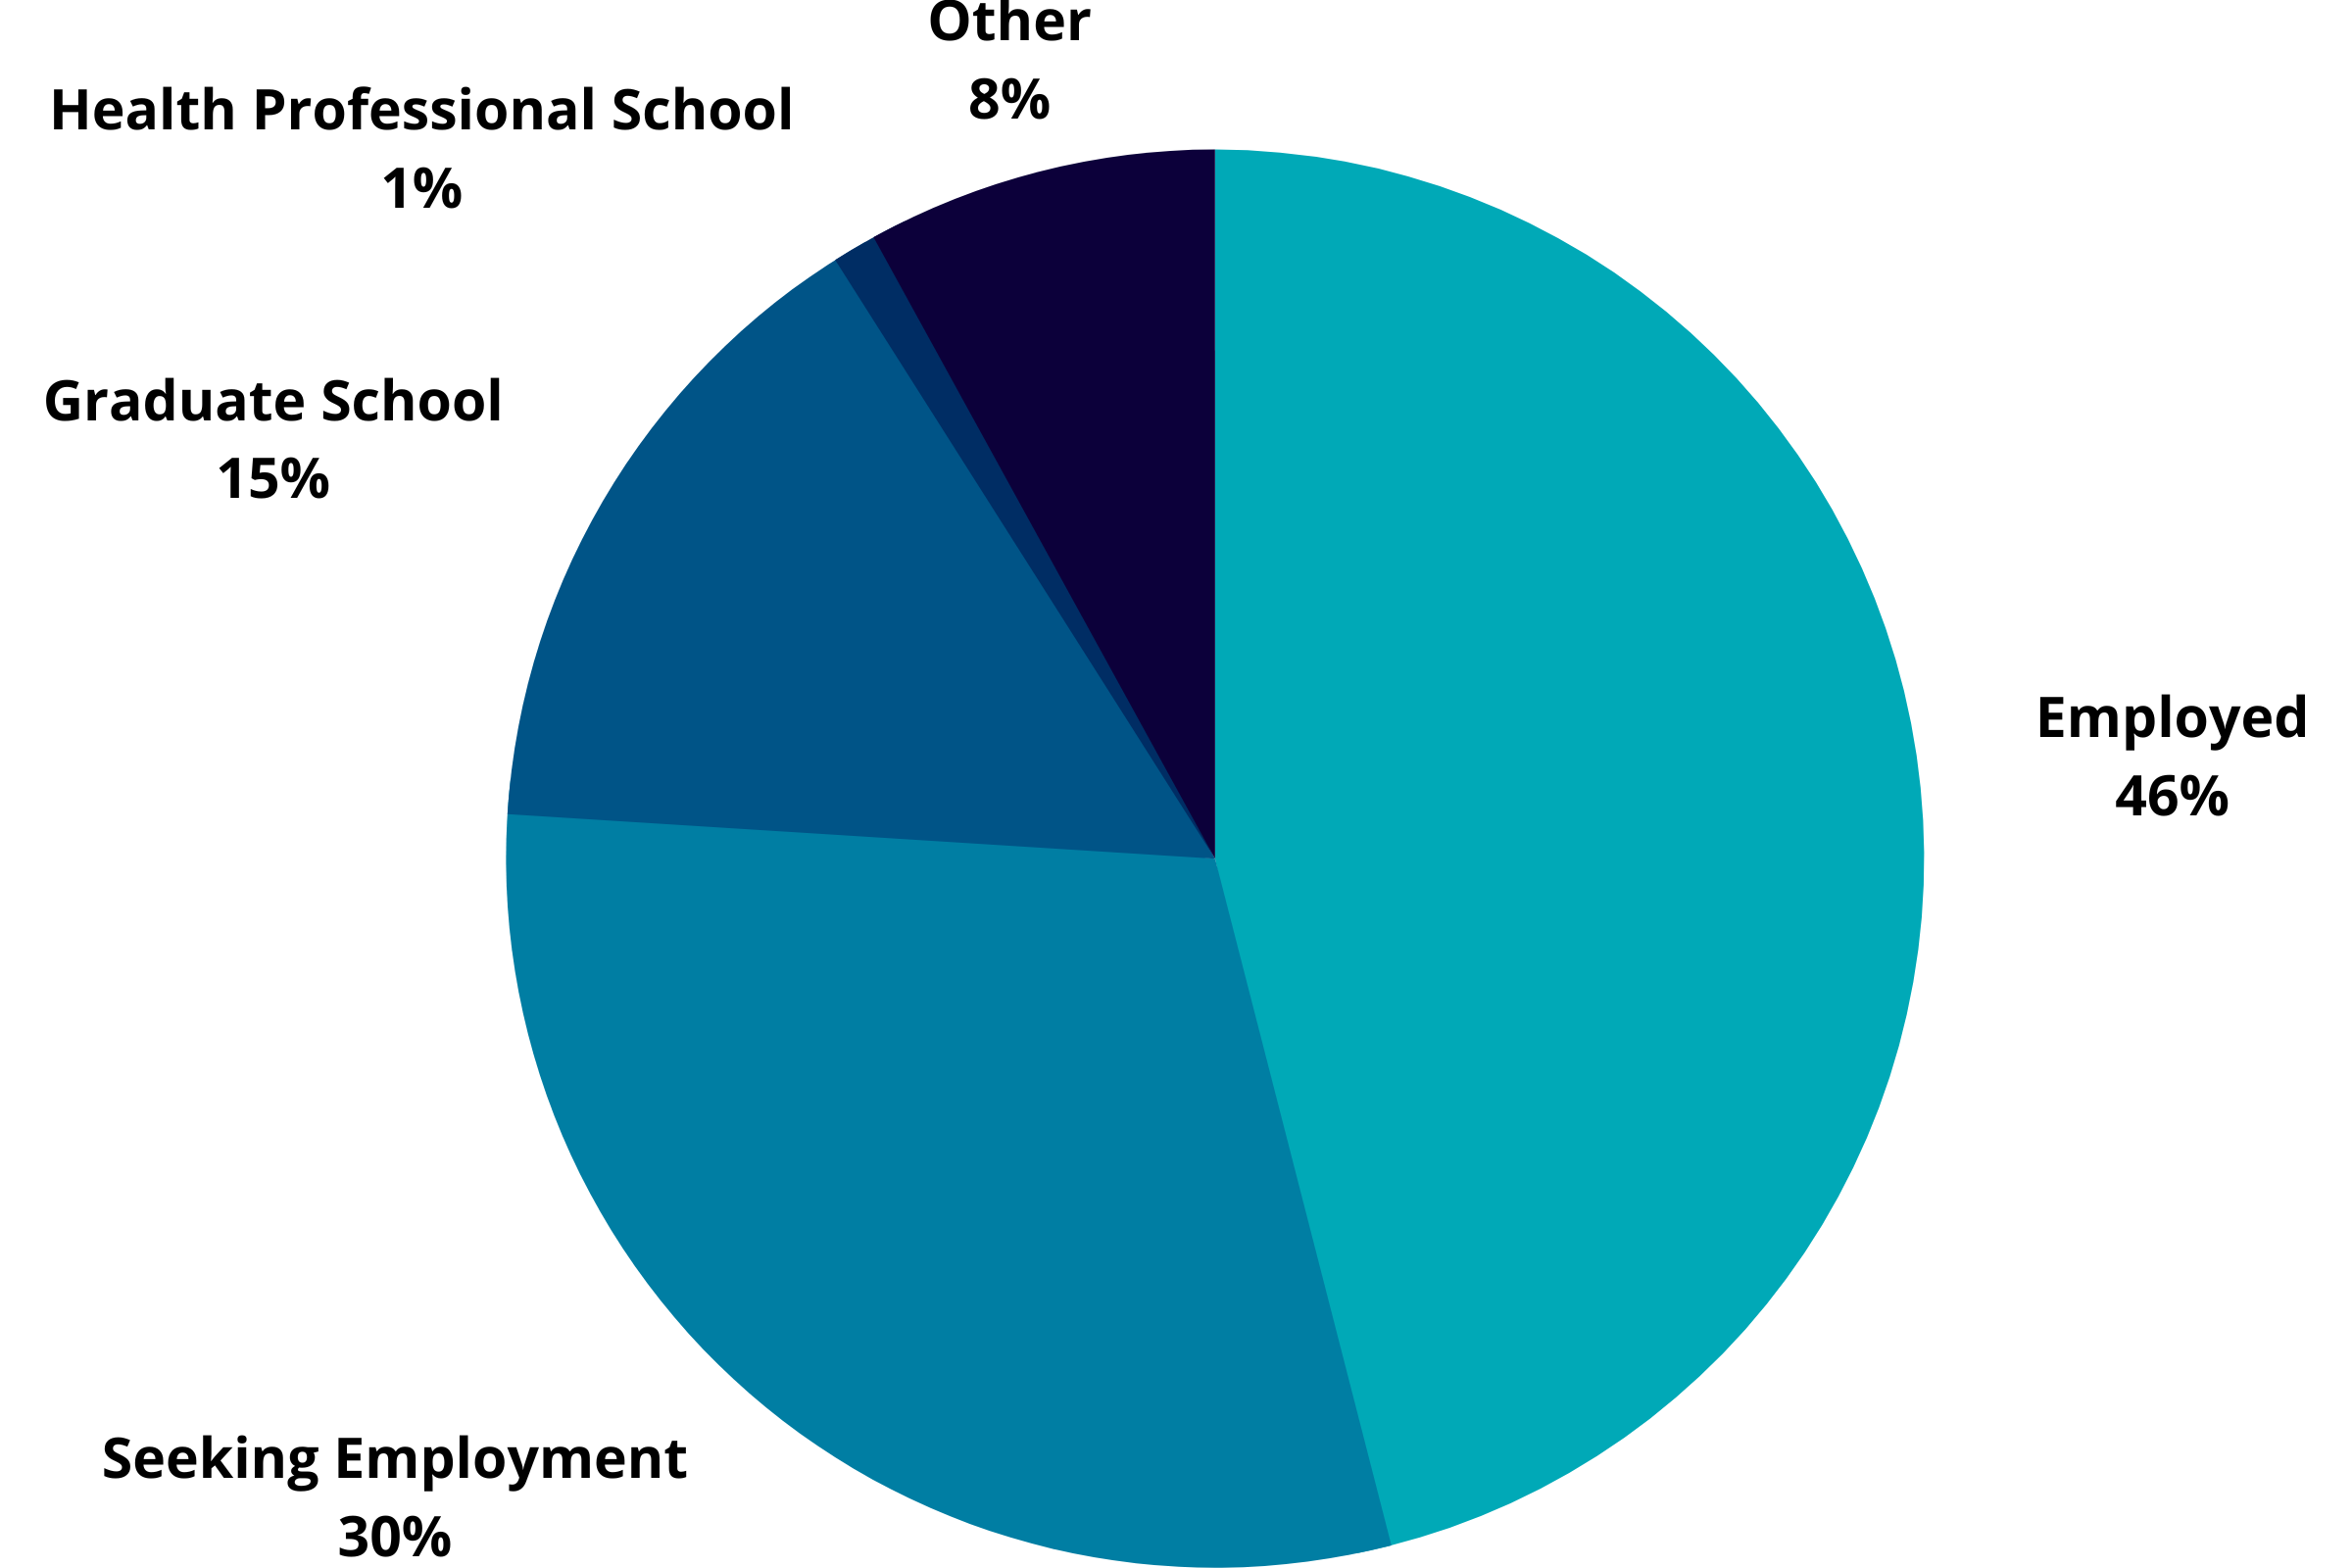 Mathematics Graduation Outcomes: Employed 46%, Seeking Employment 30%, Graduate School 15%, Health Professional School 1%, Other 8%